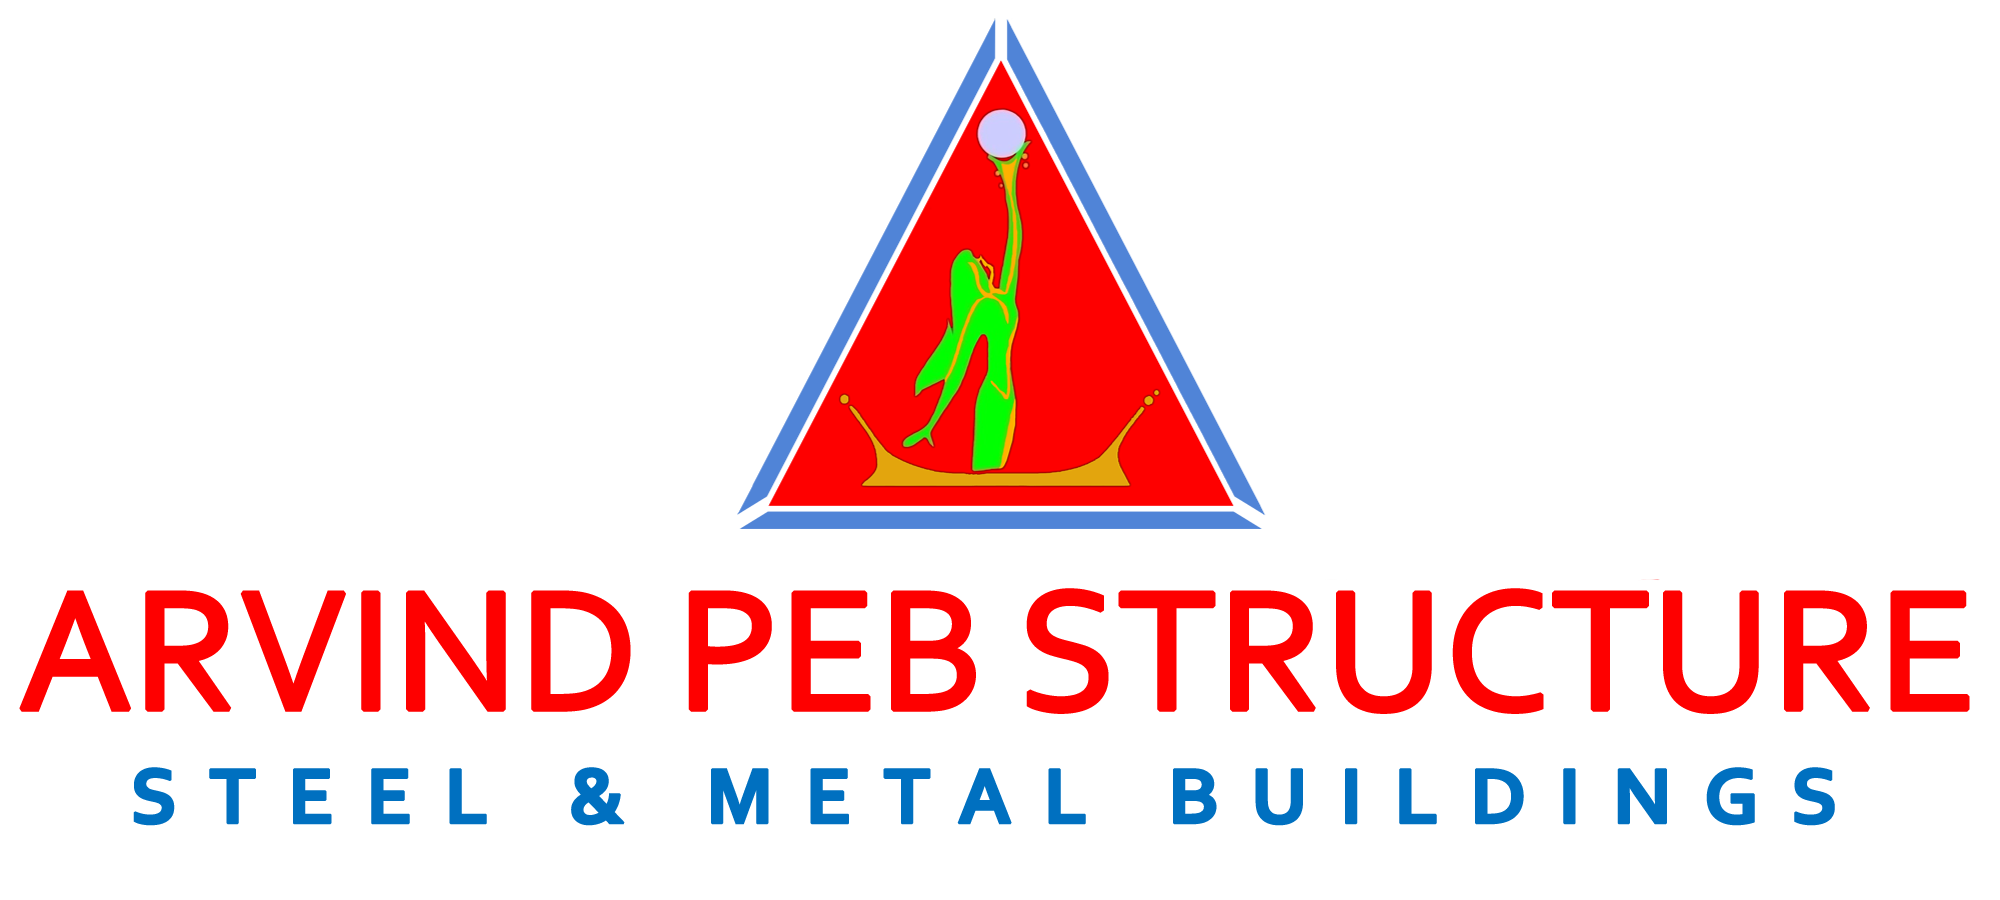 Peb structure companies